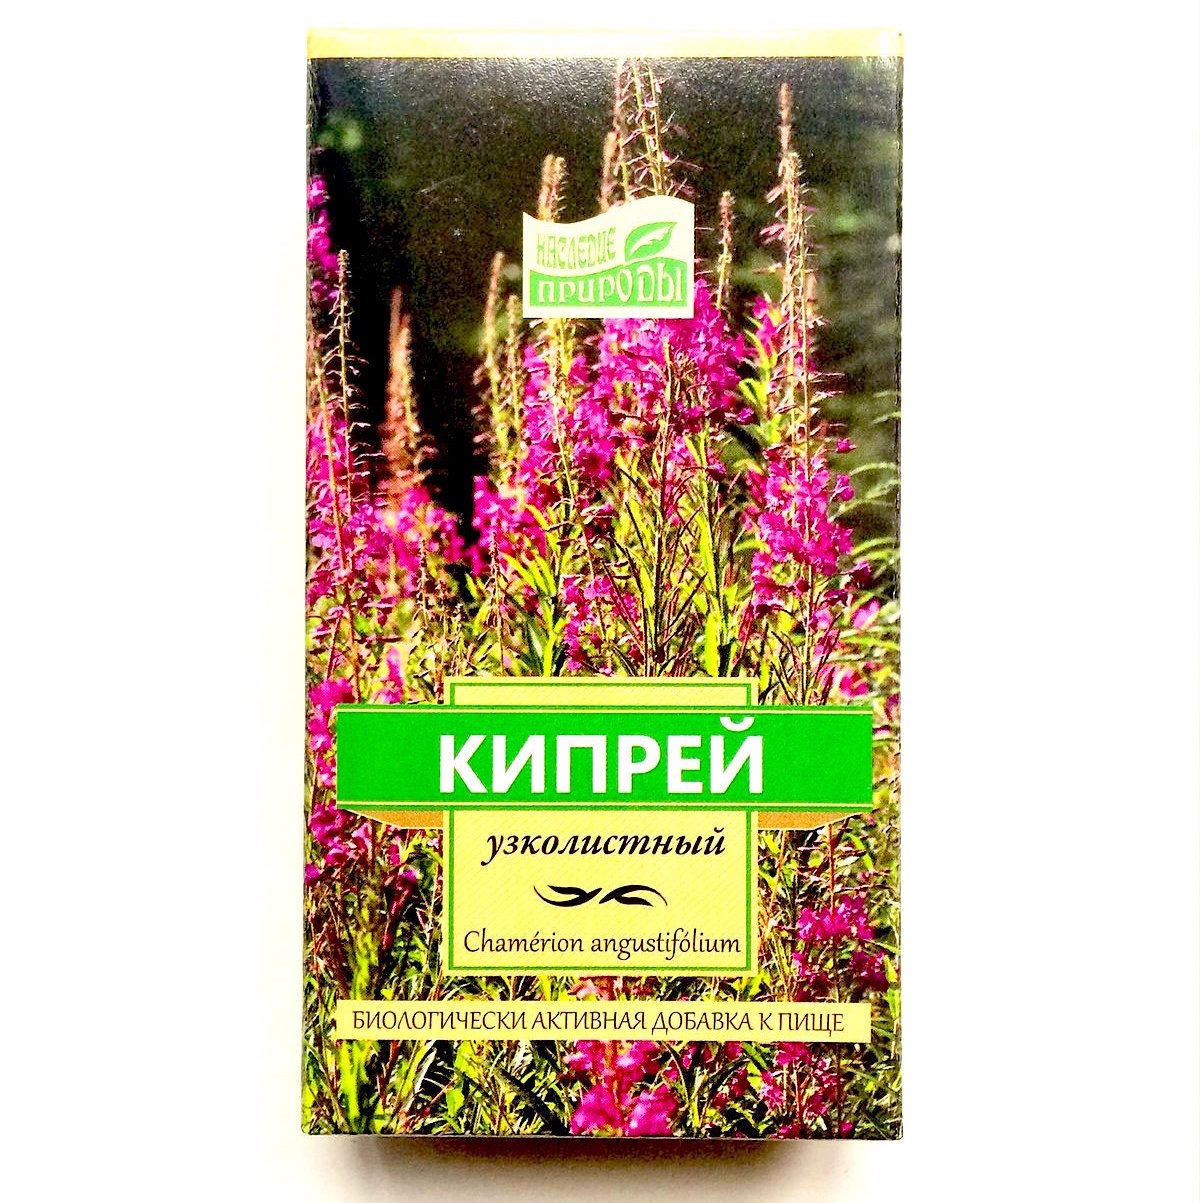 50g Siberian "Ivan-tea" Fireweed herb